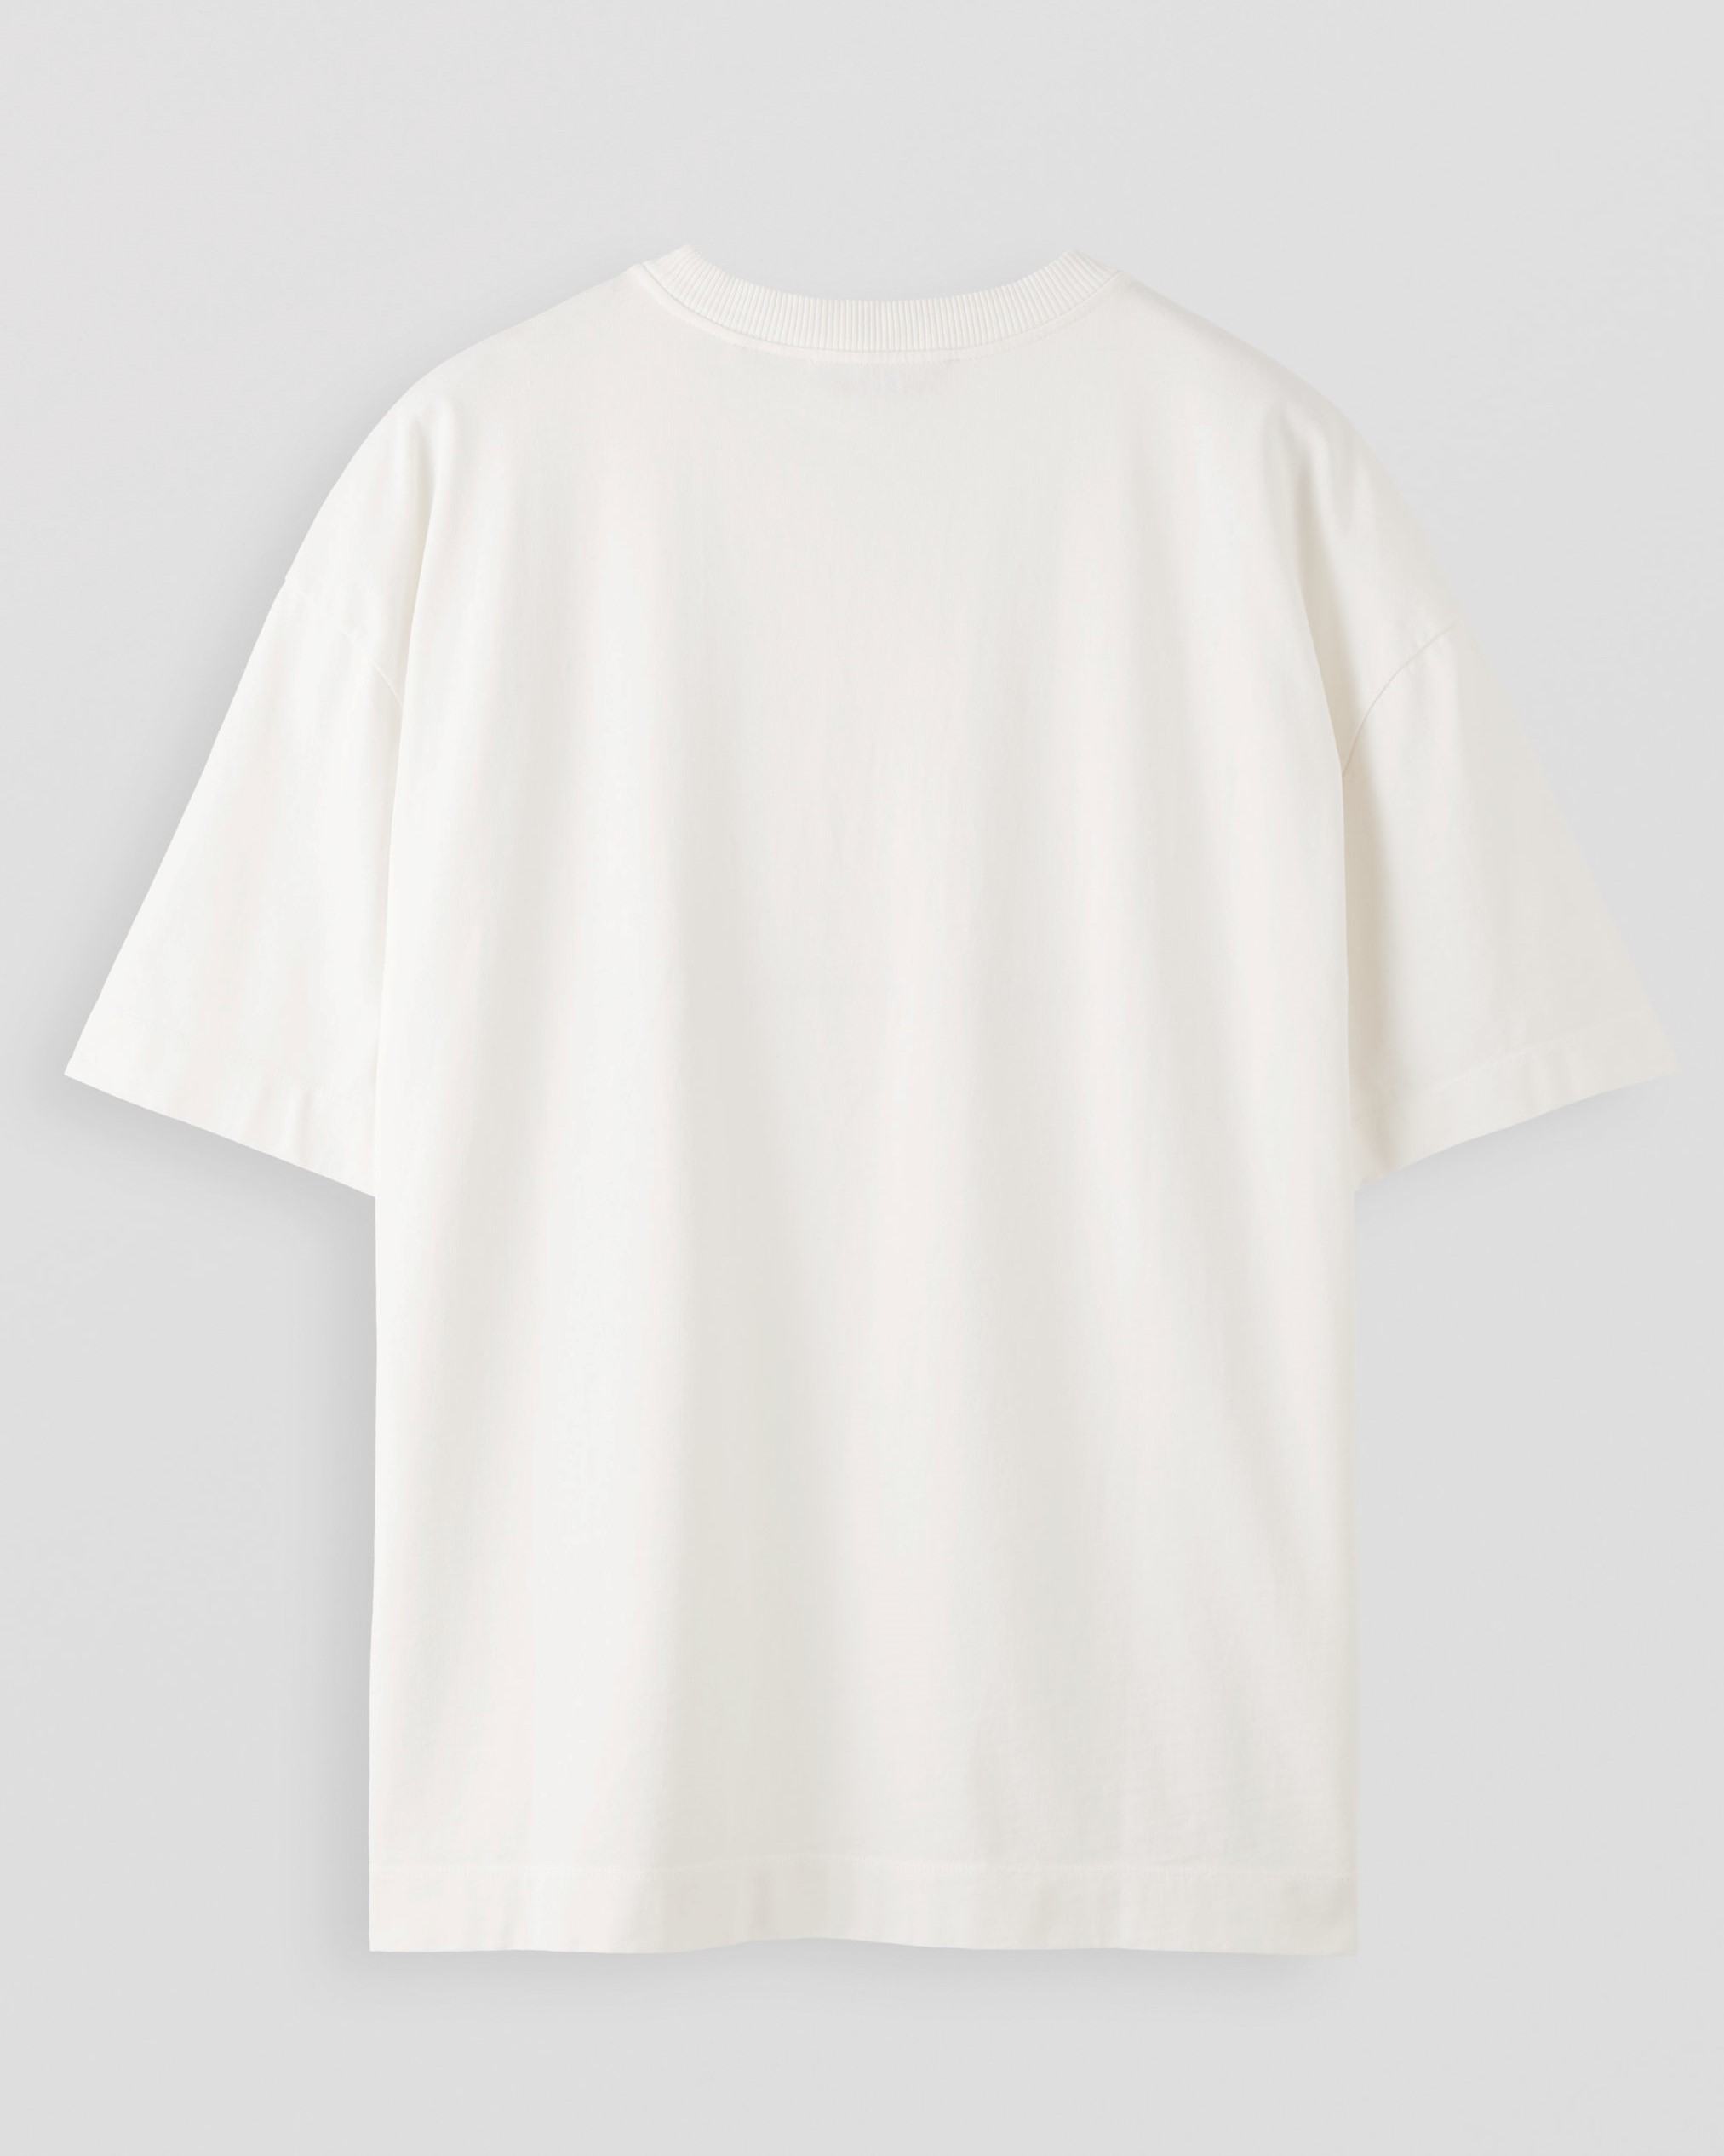 APPLIED ART FORMS Oversize T-Shirt in Light Ecru S